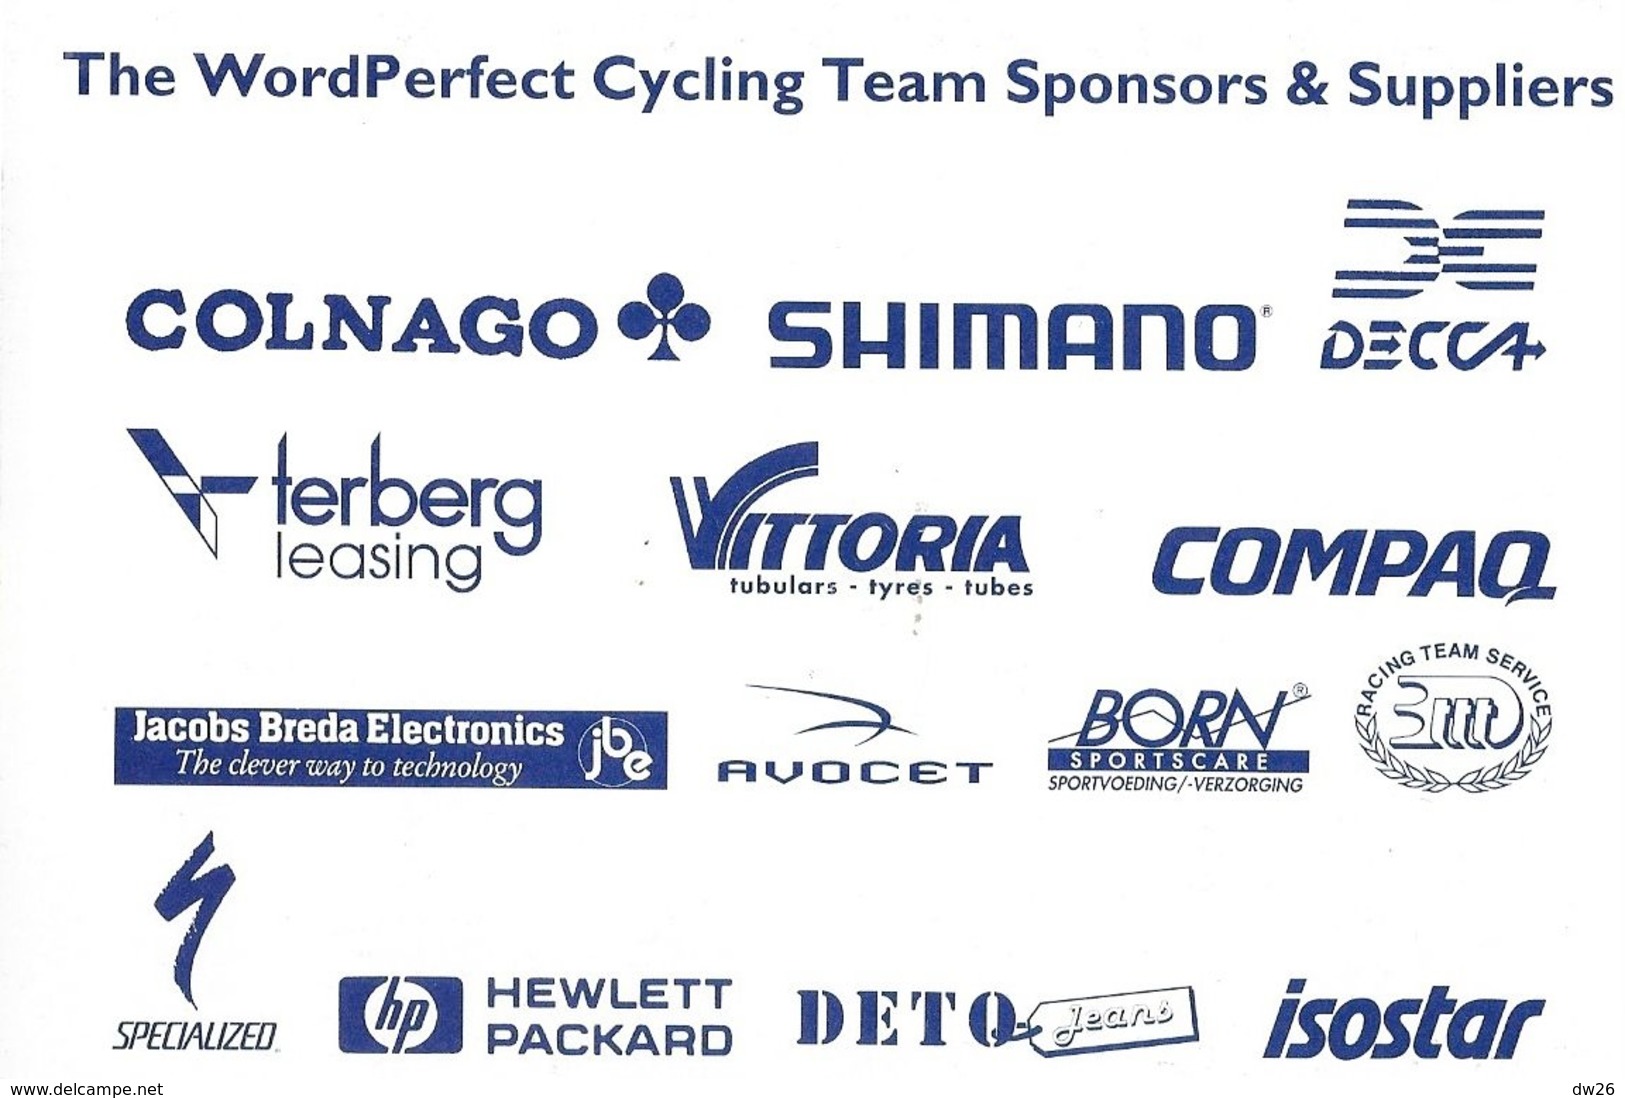 Cycliste: Atle Kvalsvoll, Equipe De Cyclisme Professionnel: Team Wordperfect Software, Norvège 1993 - Sport